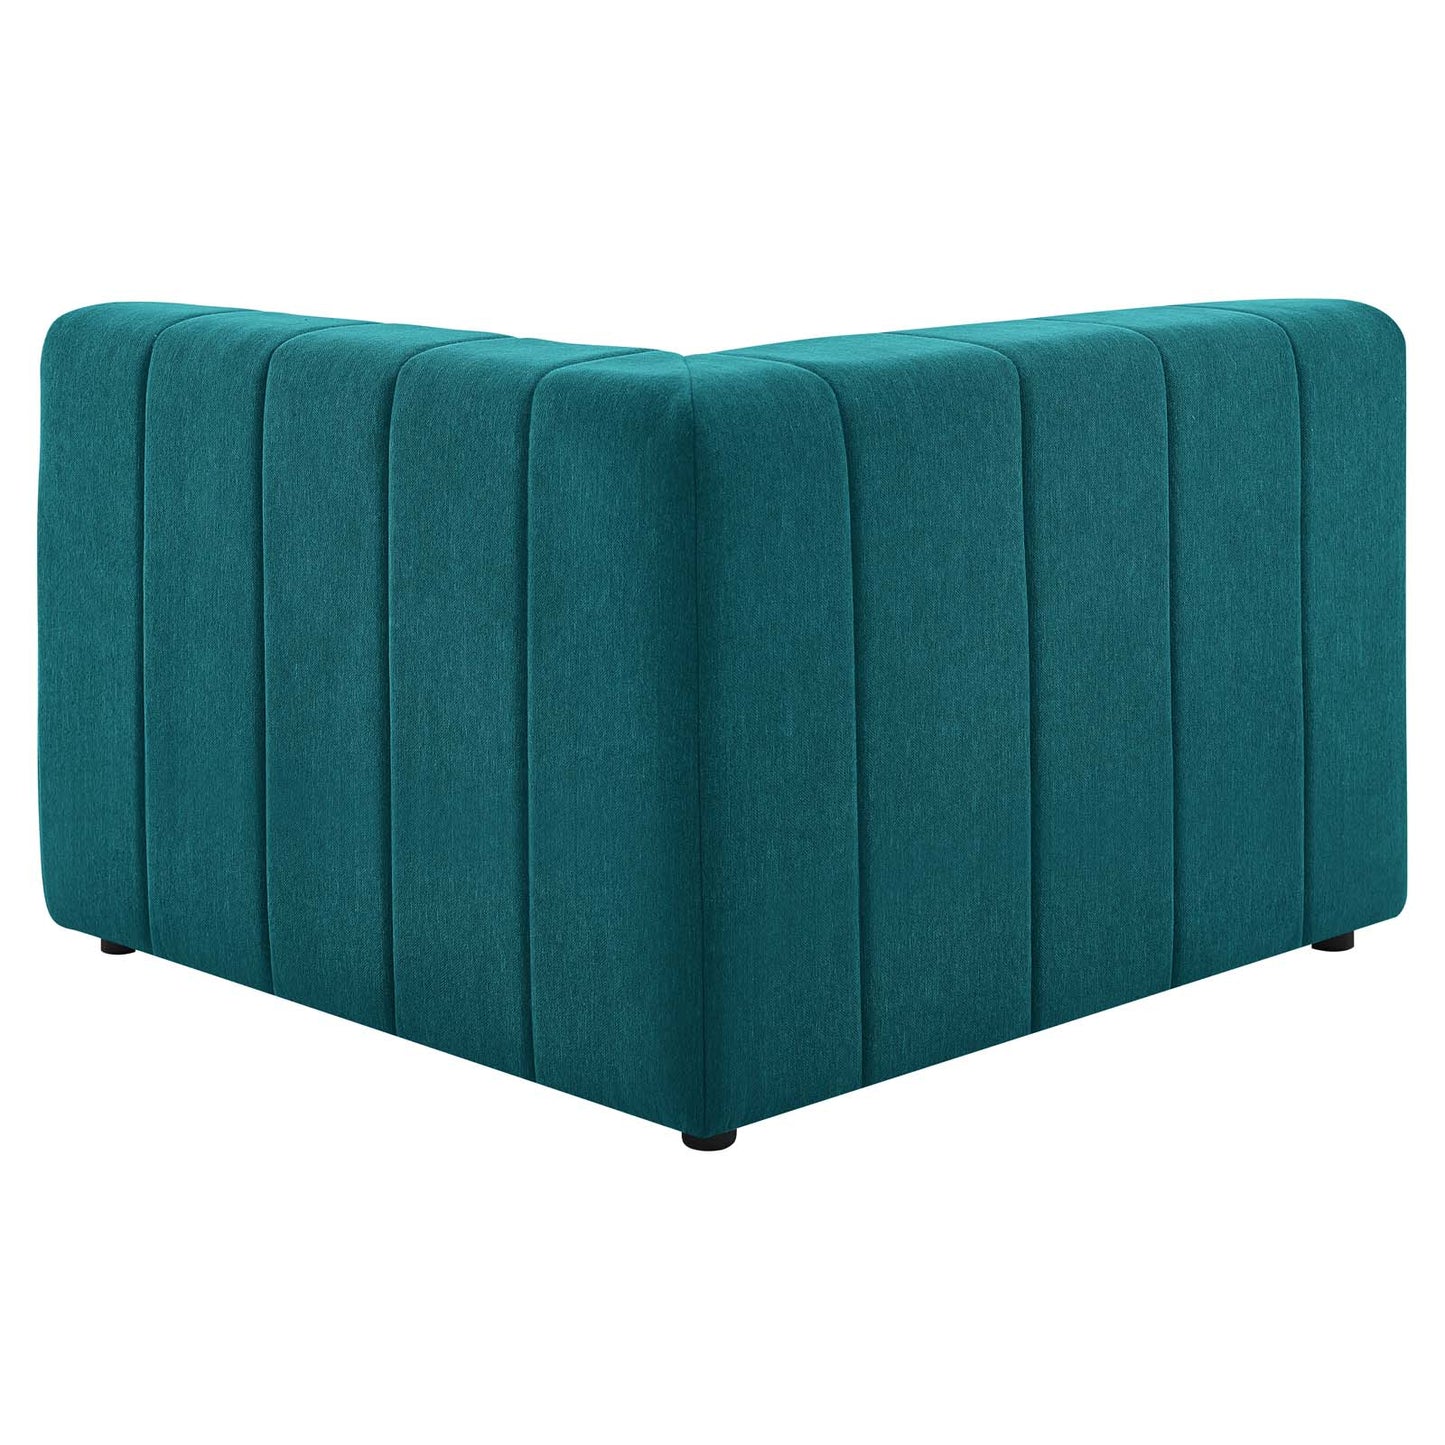 Bartlett Upholstered Fabric Right-Arm Chair Teal EEI-4394-TEA